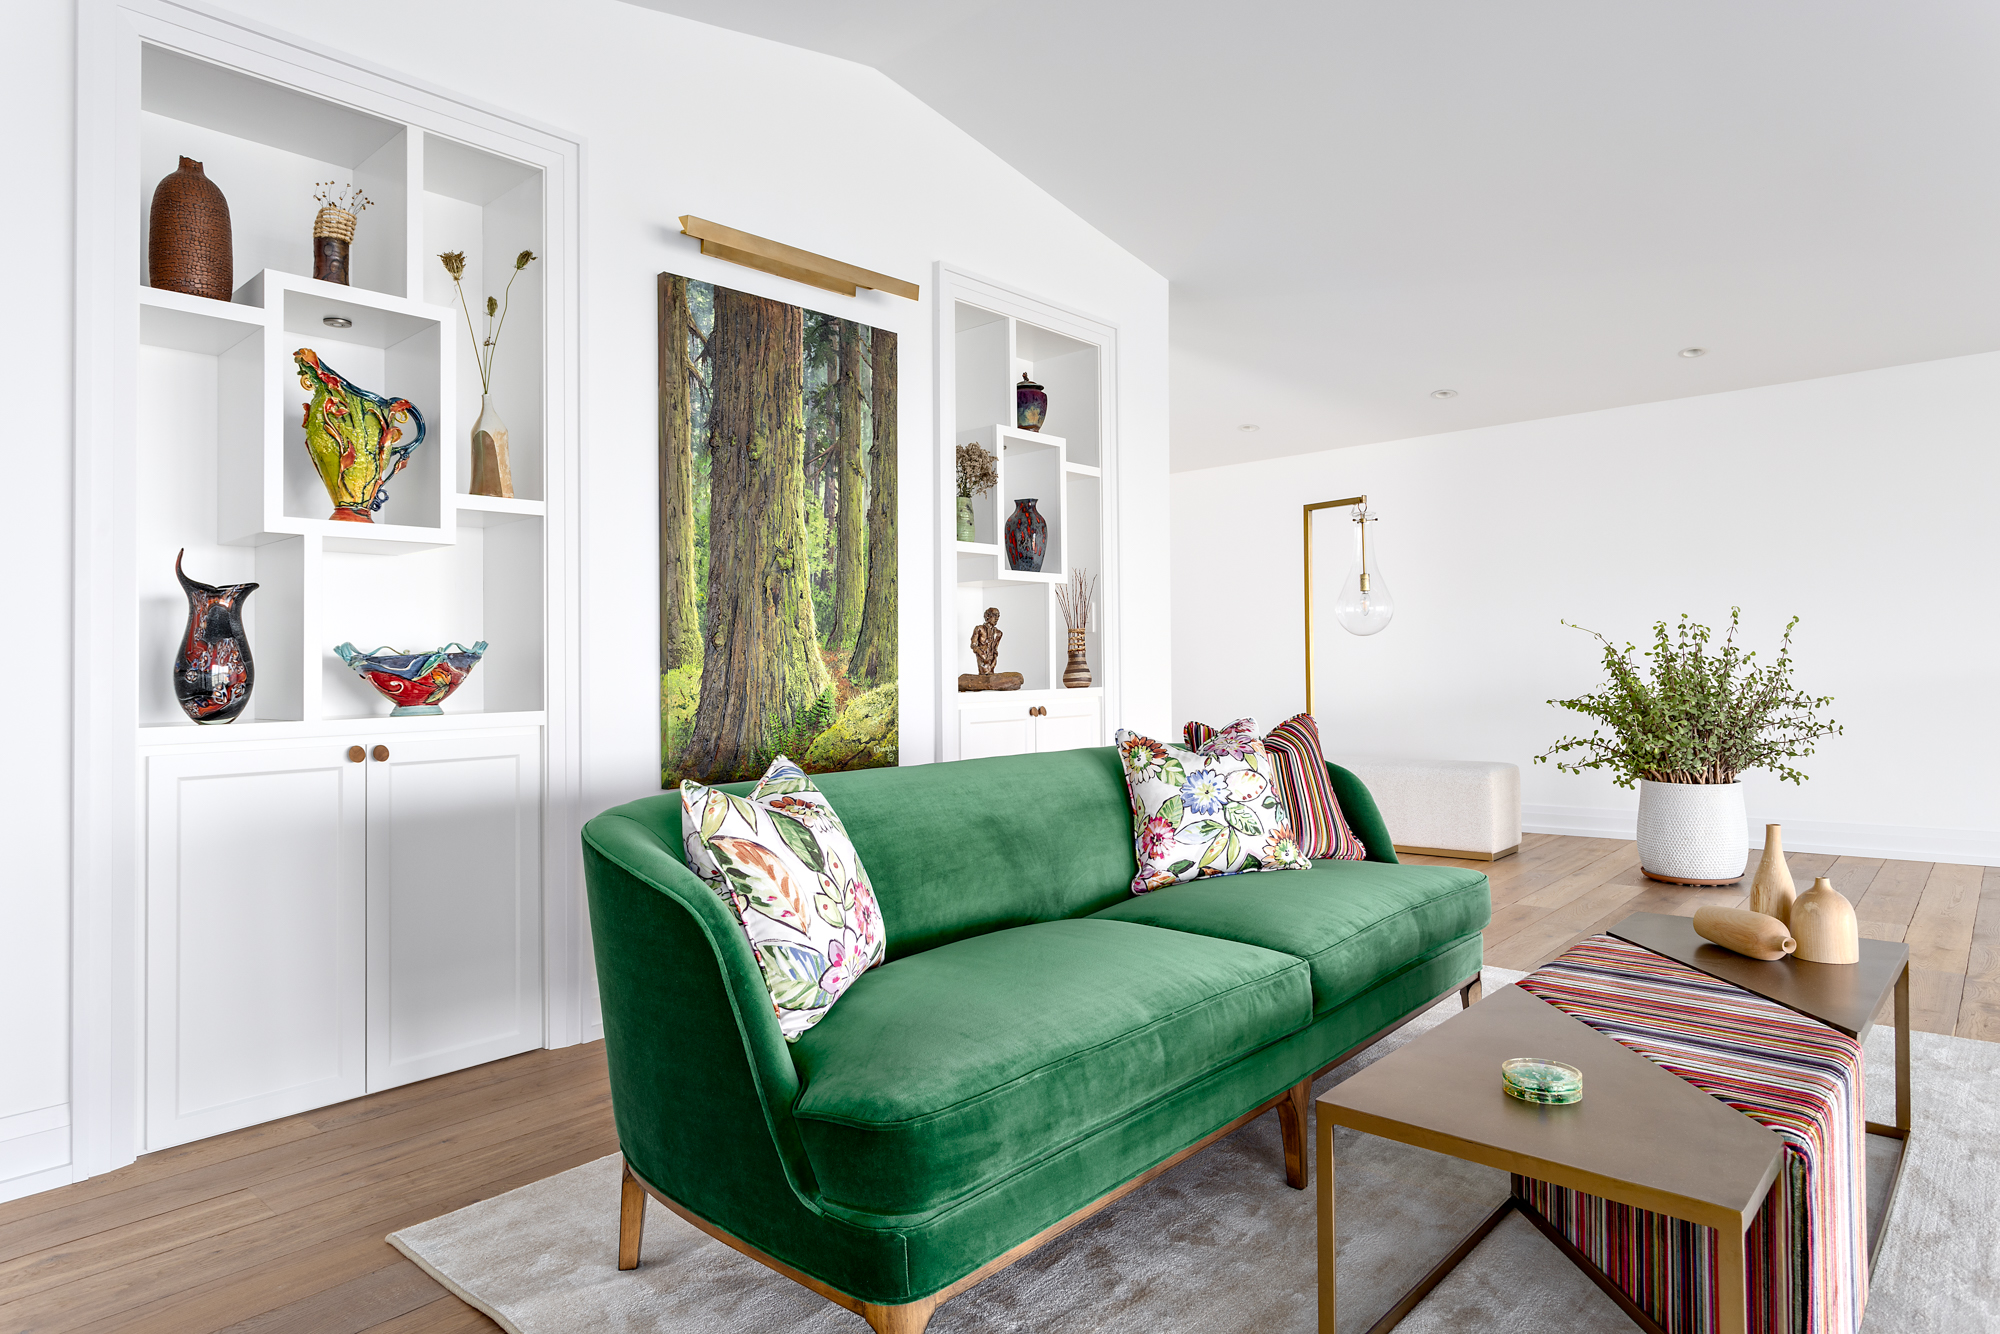 full-service-interior-designer-lions-bay-vancouver-lessons-in-entrepreneurship-emerald-green-sofa-in-living-room-colorful-throw-pillows-built-in-shelves-custom-home-renovation